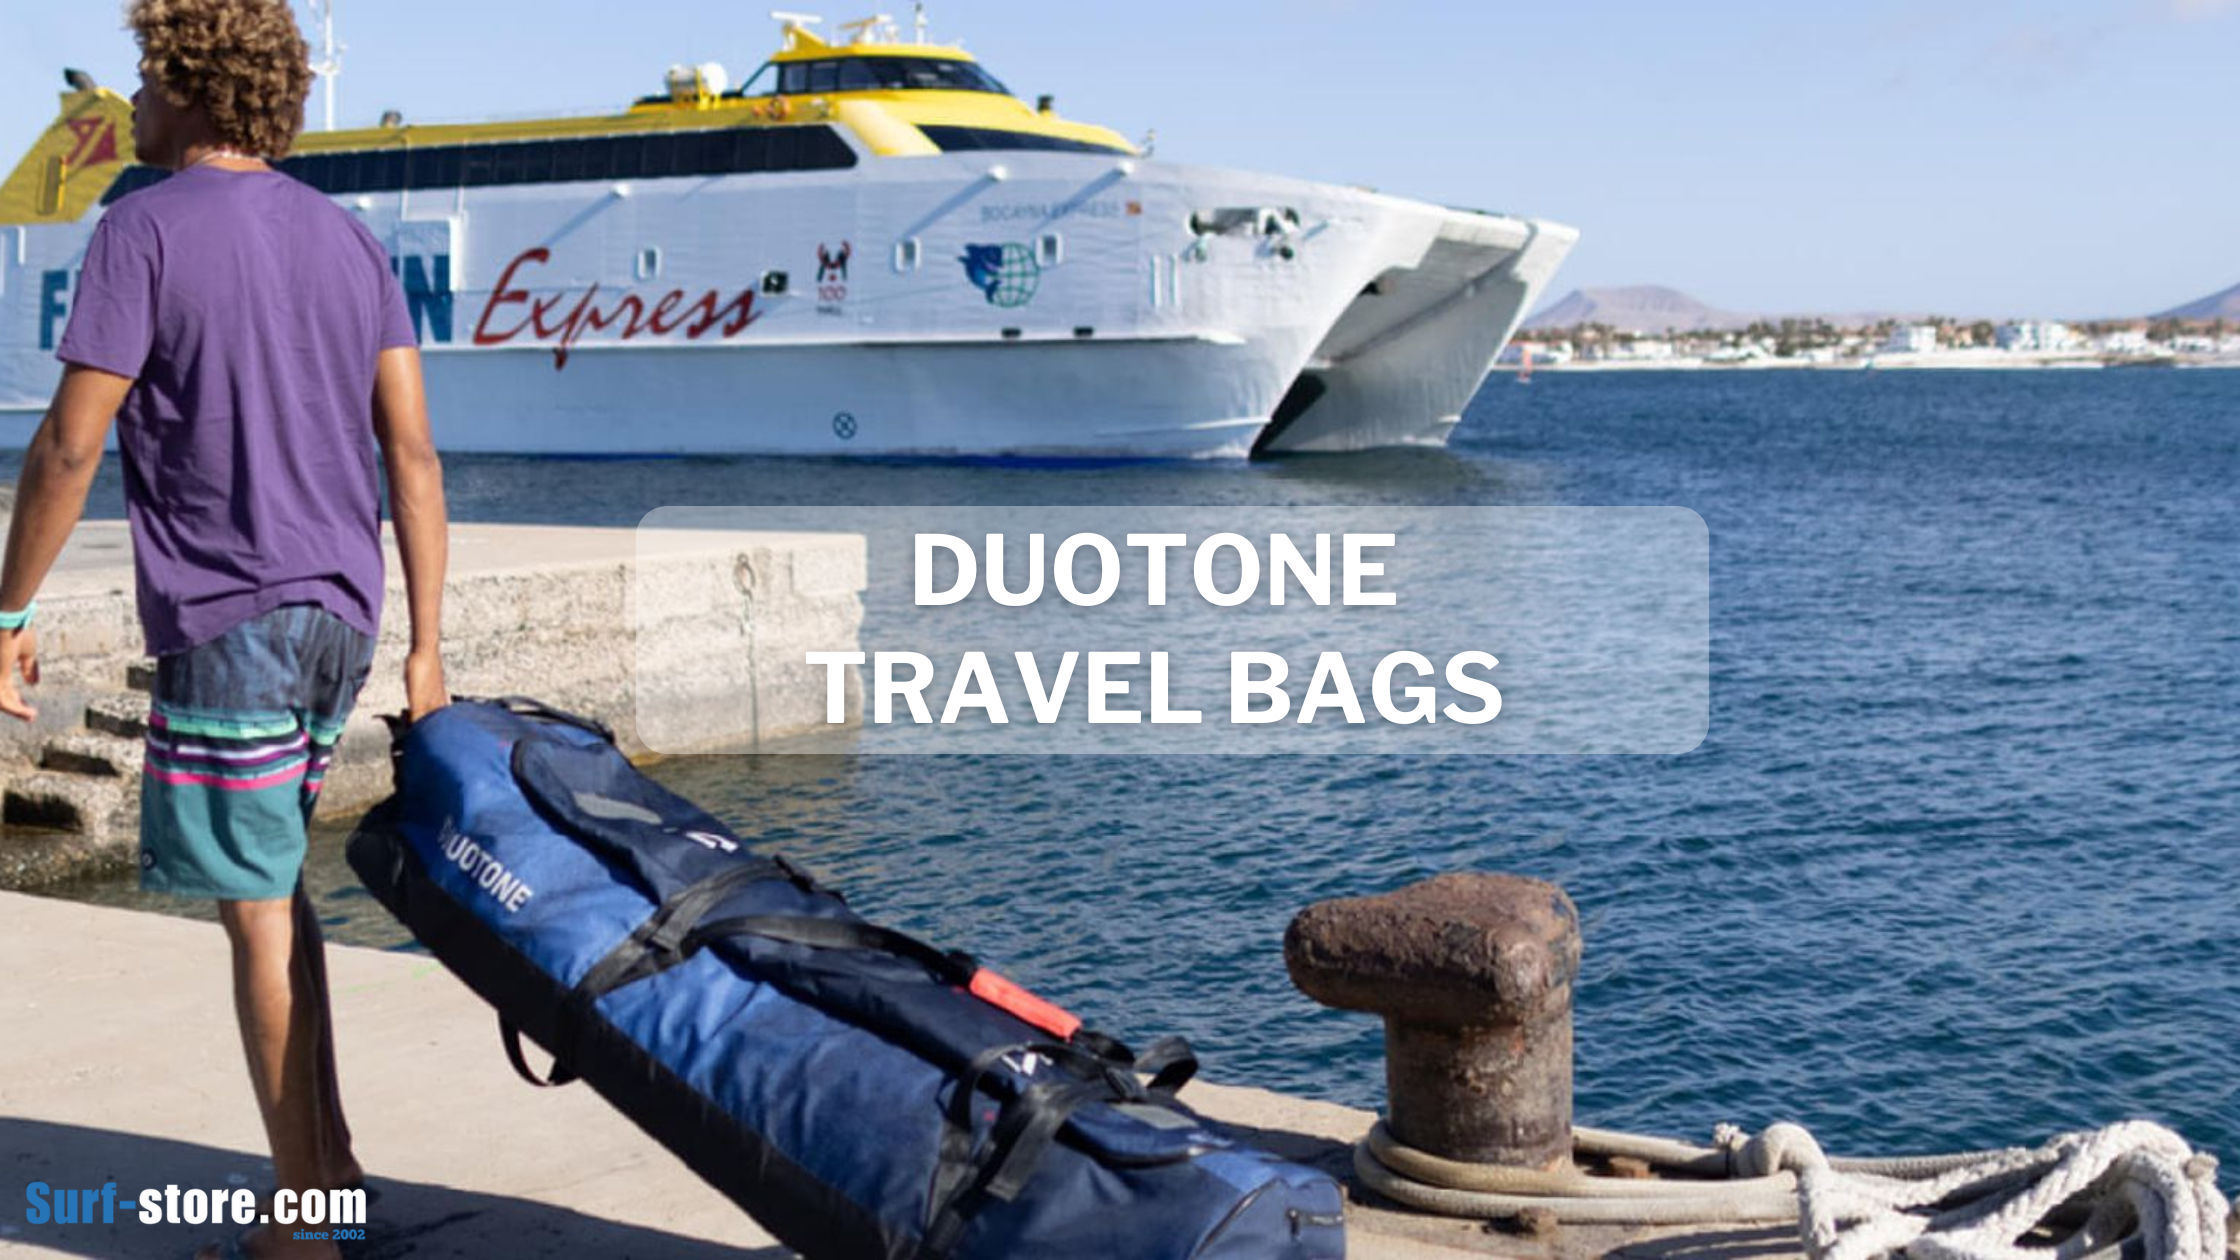 Duotone travel bags